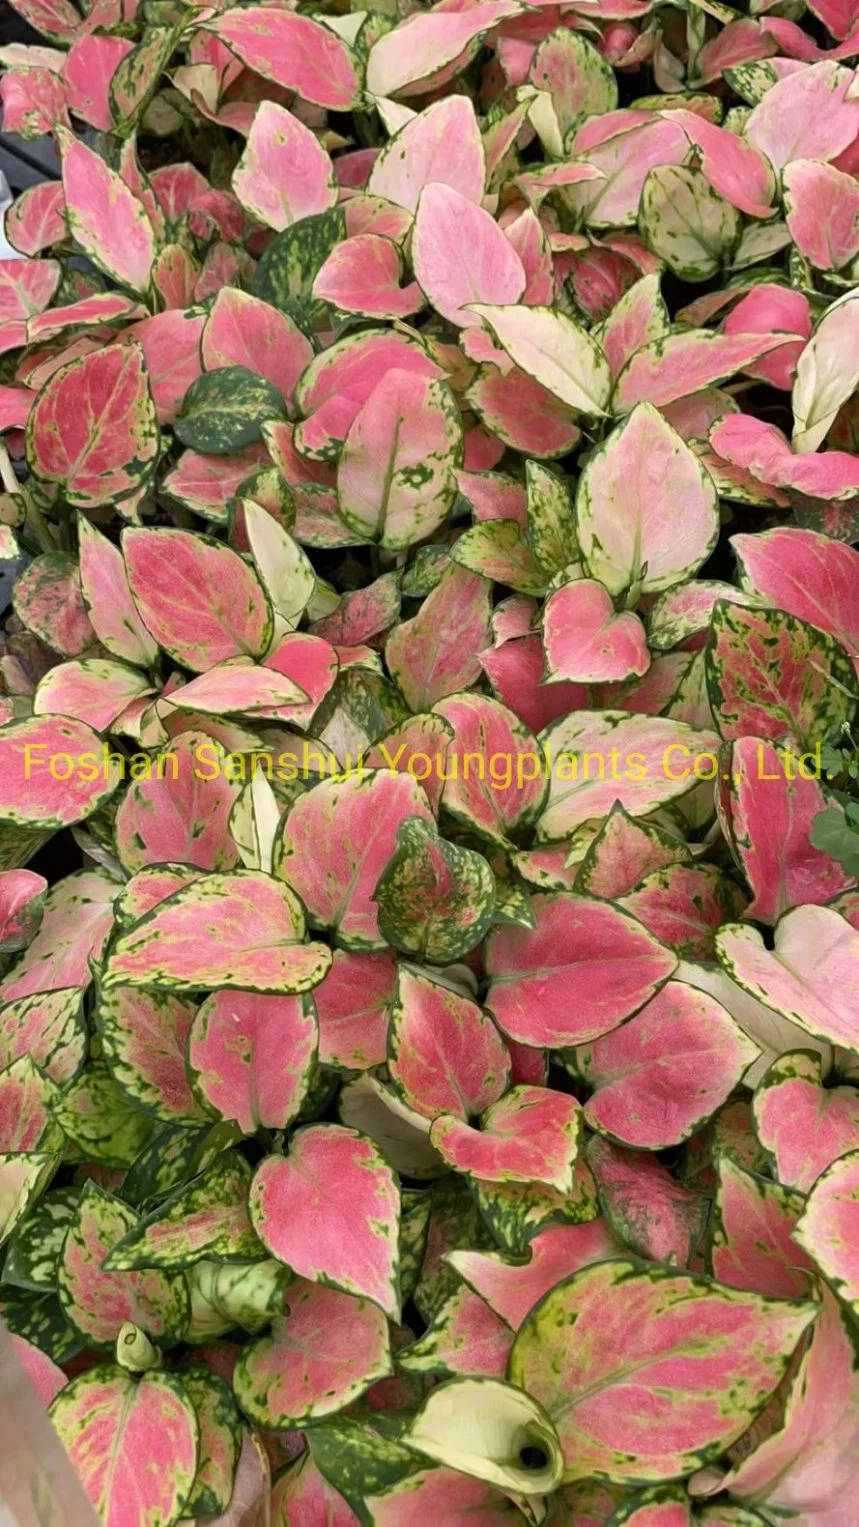 Tissue Culture Tray Natural Natural Nulture Bonsai النباتات الداخلية الصغيرة الحية الجملة